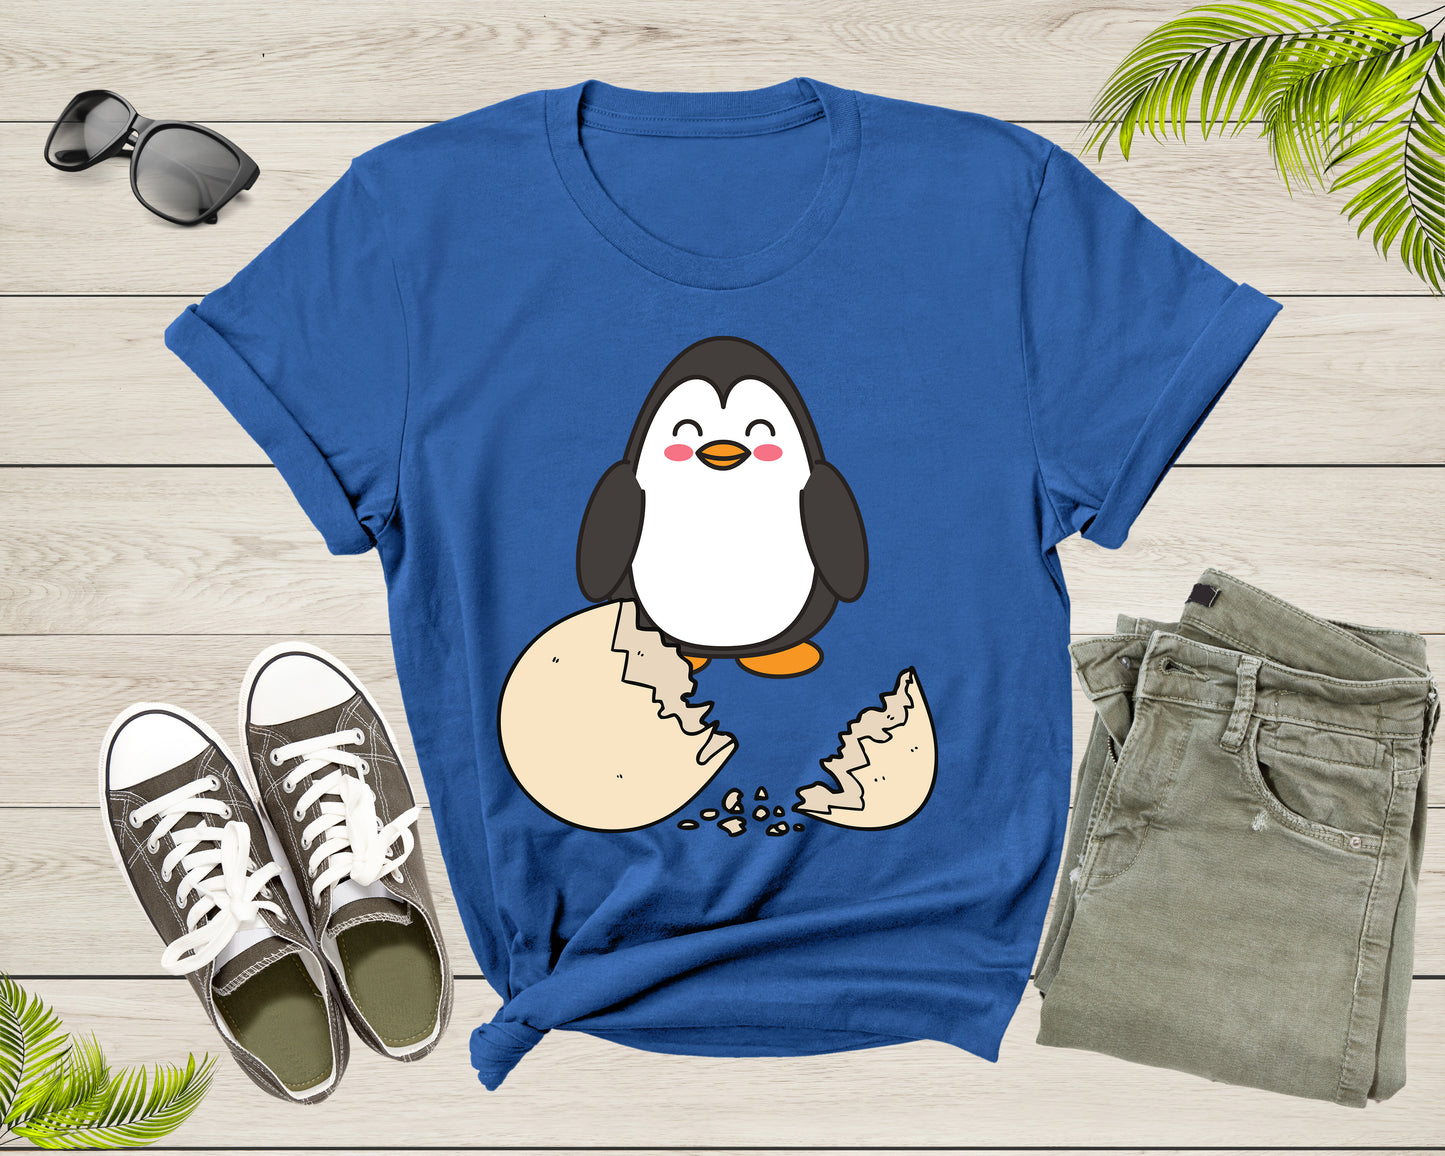 Cute Funny Penguin Hatched Egg Cutie Animal Adorable Sweet T-Shirt Penguin Lover Gift T Shirt for Men Women Kids Boys Girls Graphic Tshirt